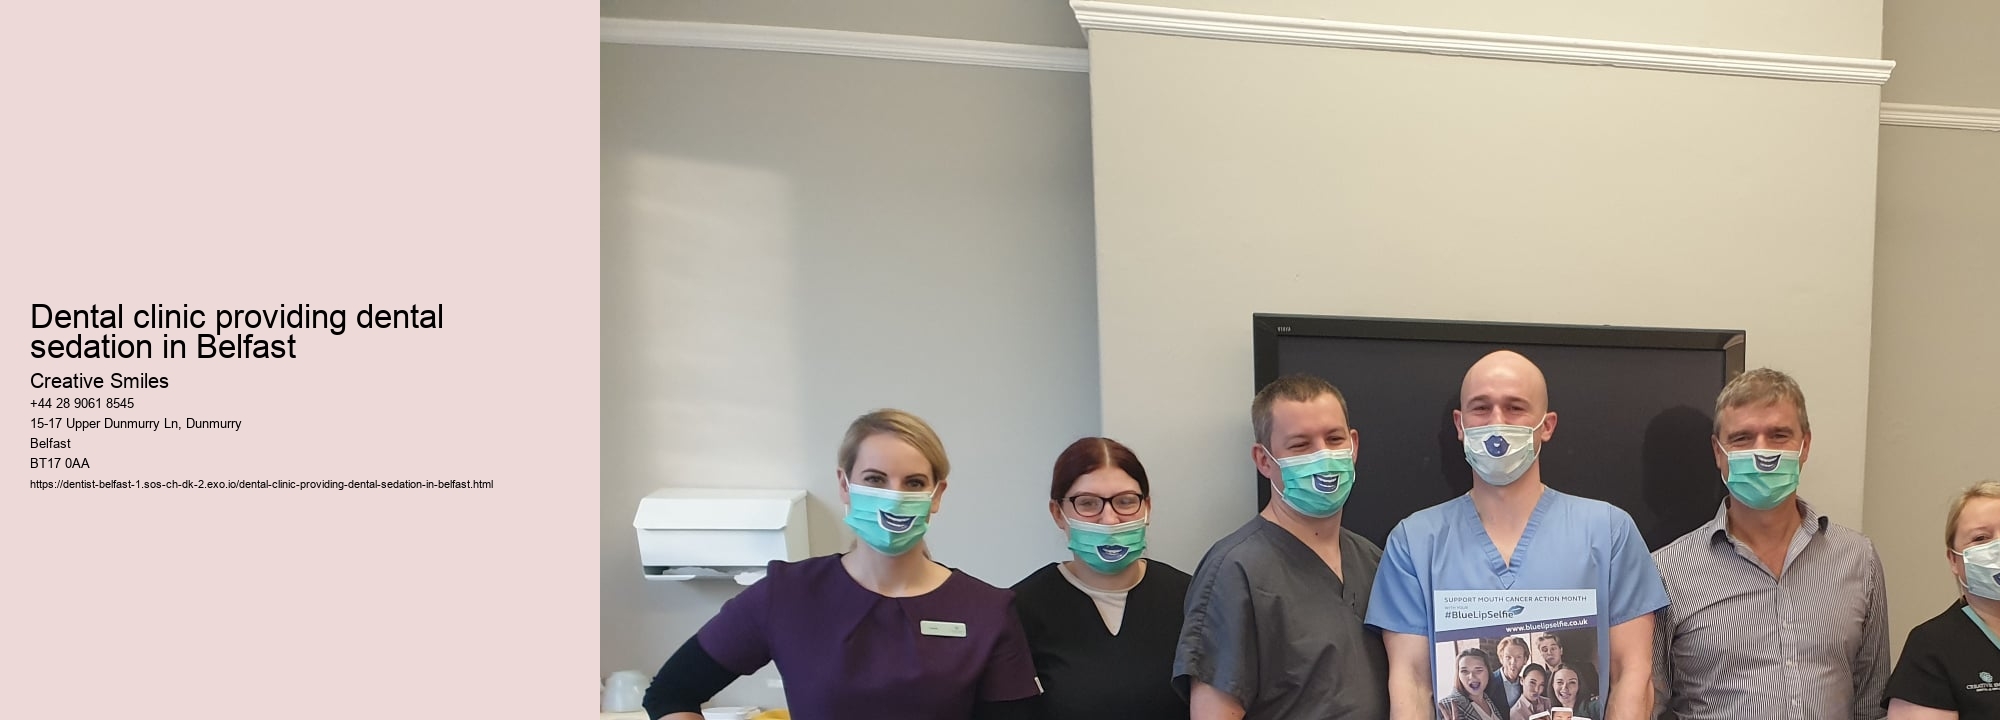 Dental clinic providing dental sedation in Belfast